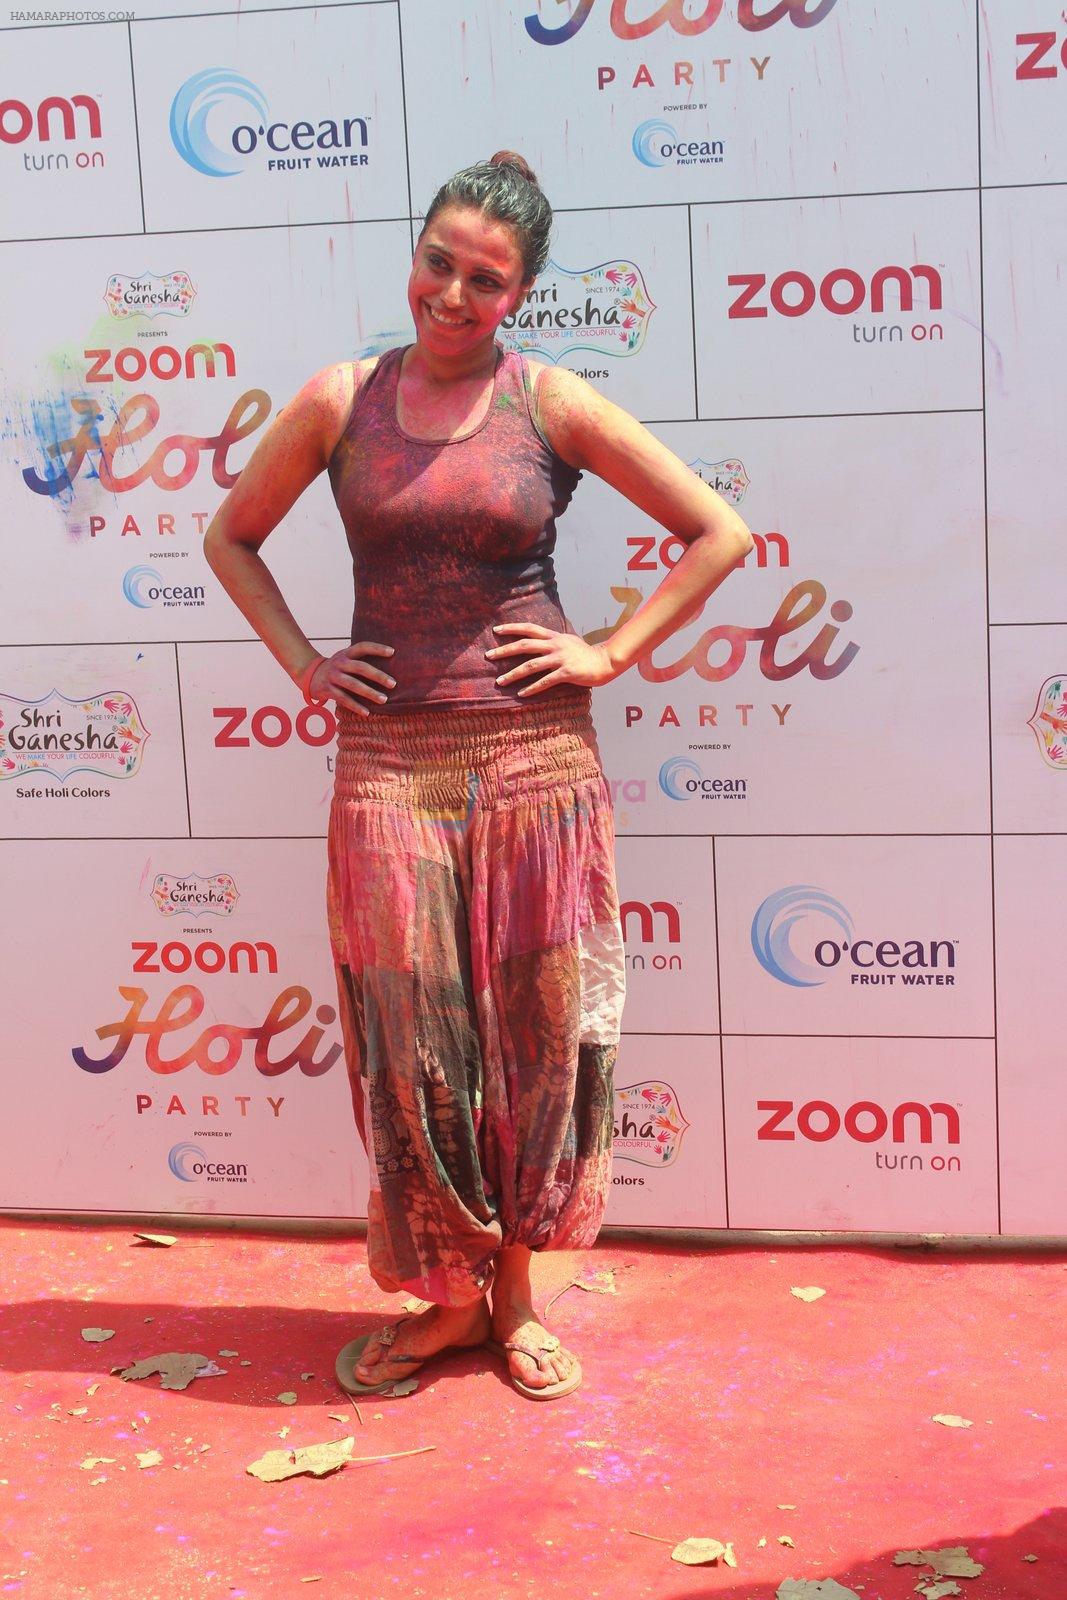 Swara Bhaskar at Zoom Holi celebration on 24th March 2016